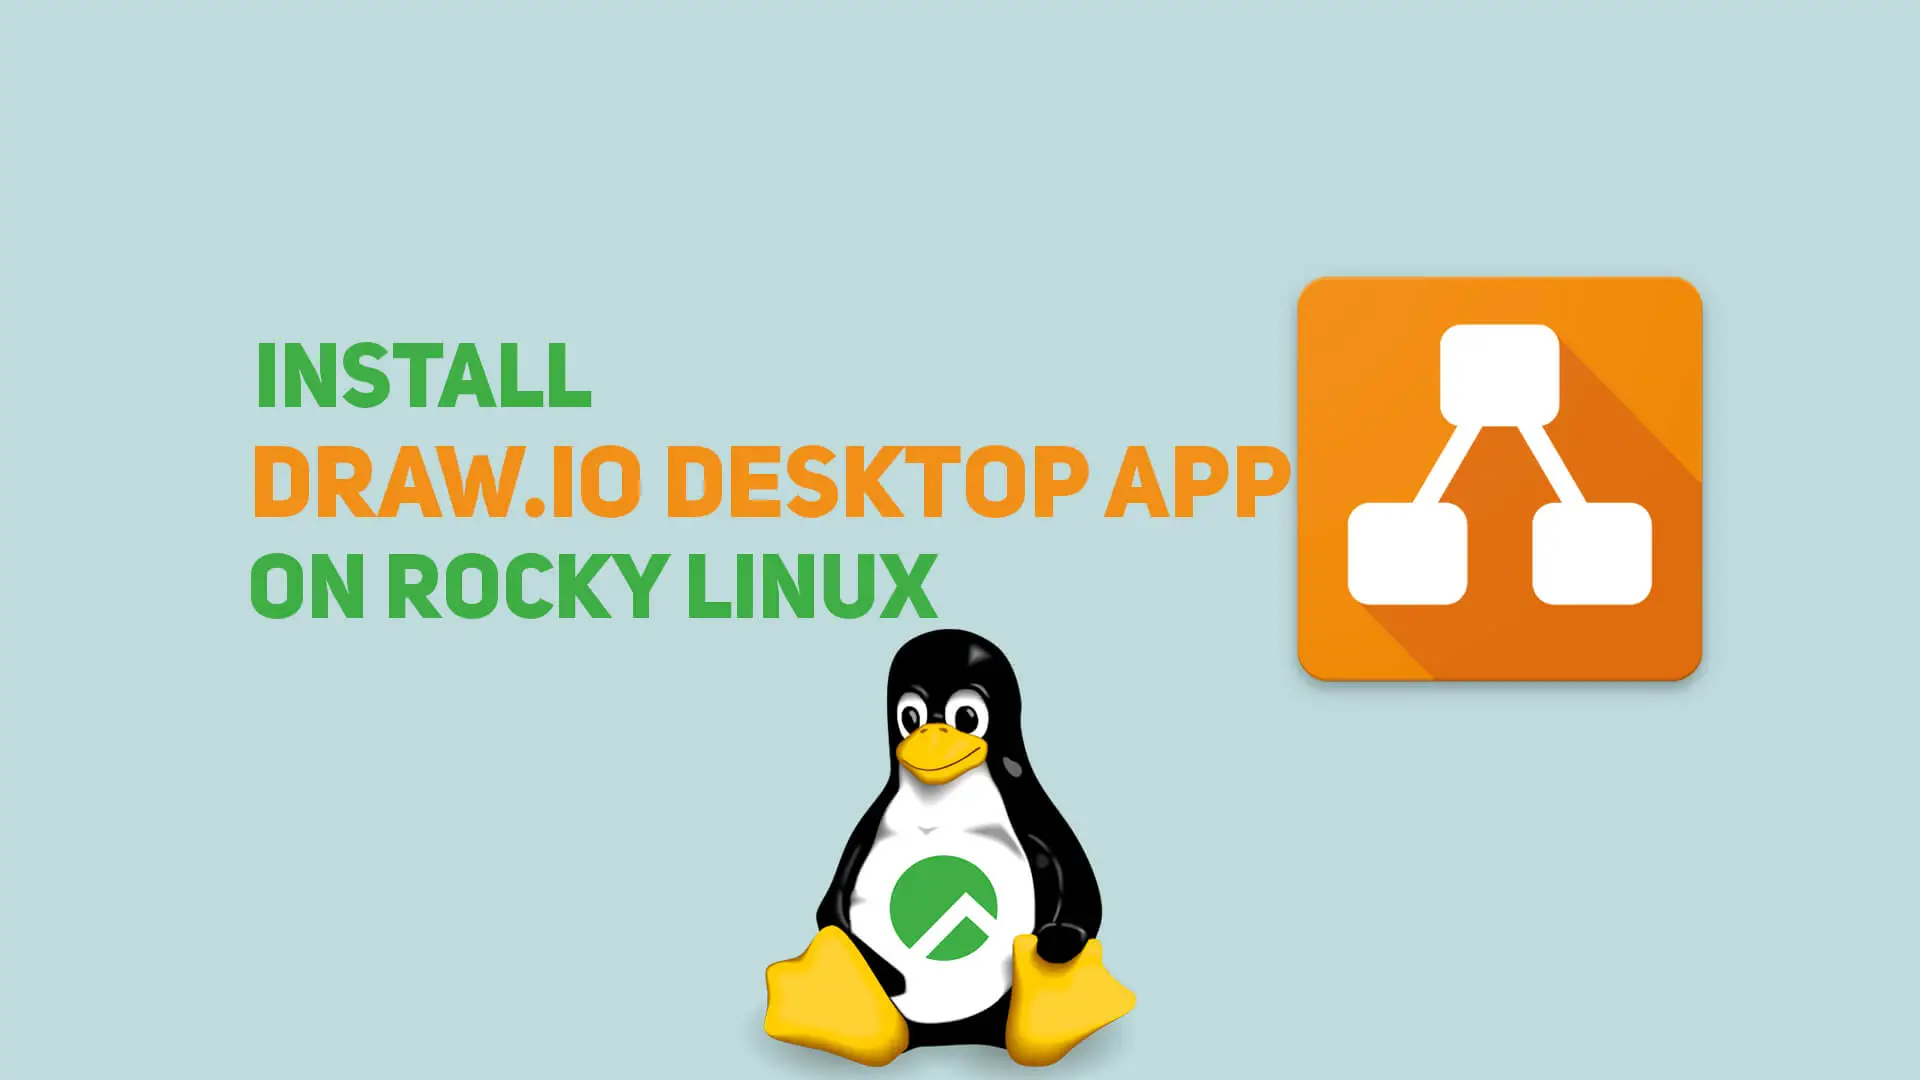 Install Draw.io Desktop App on Rocky Linux